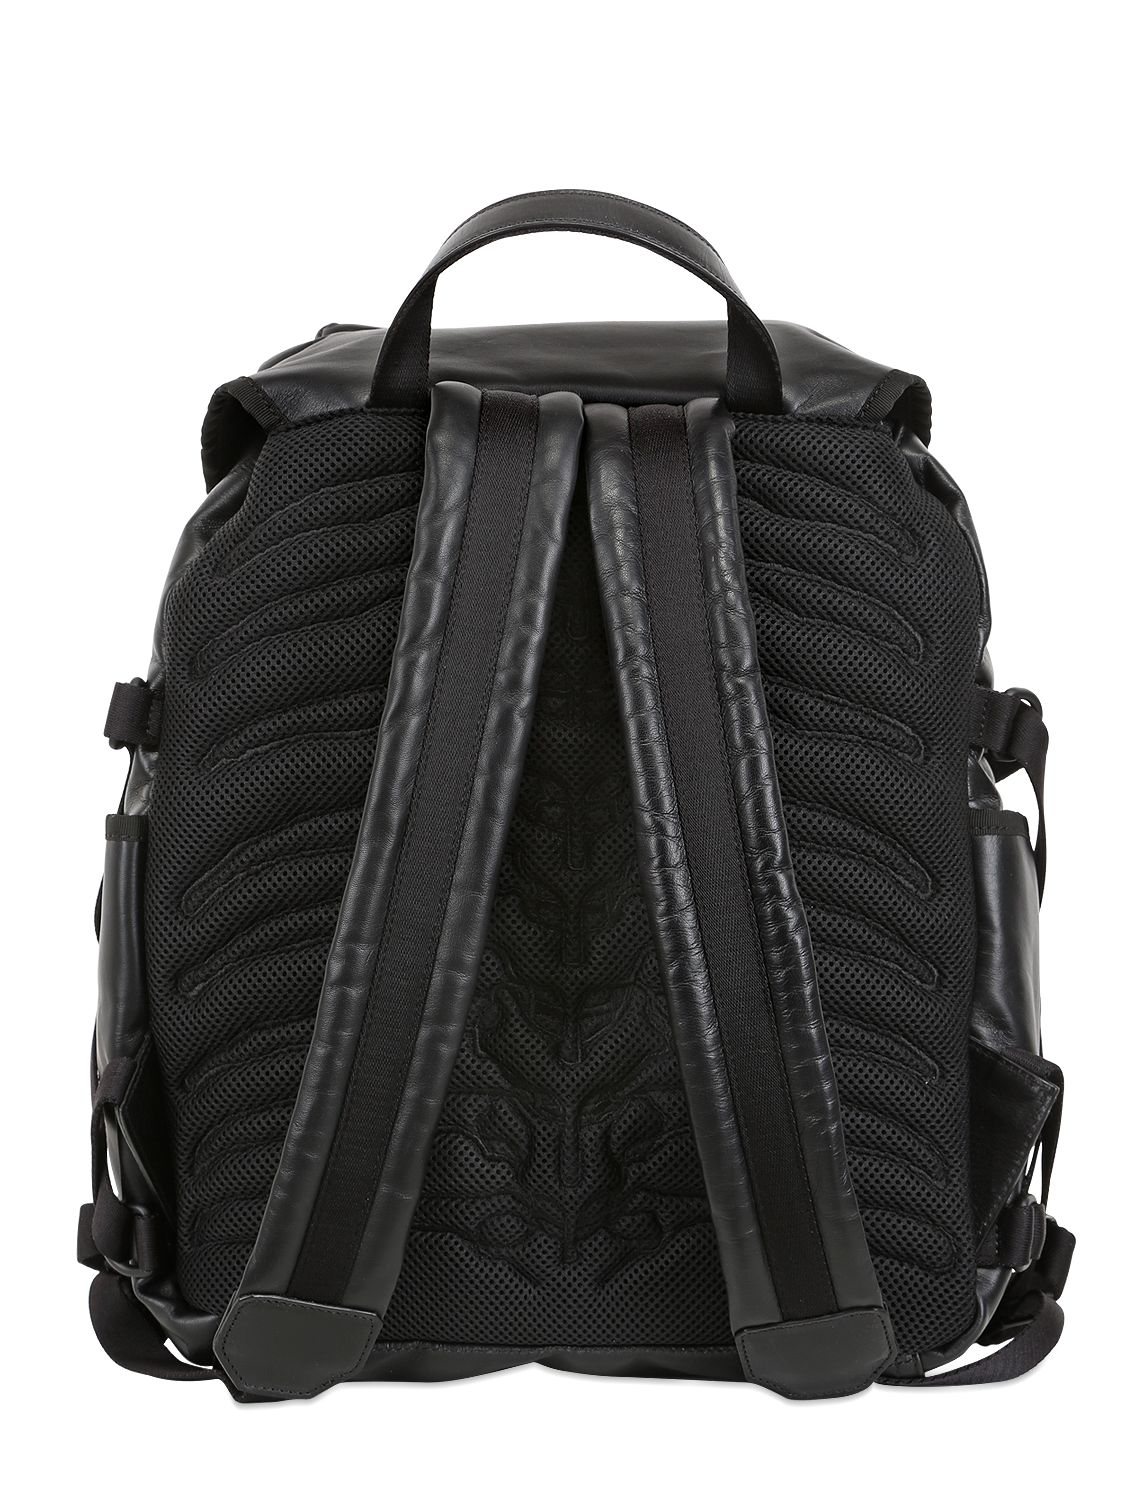 Alexander mcqueen Leather Backpack in Black for Men | Lyst